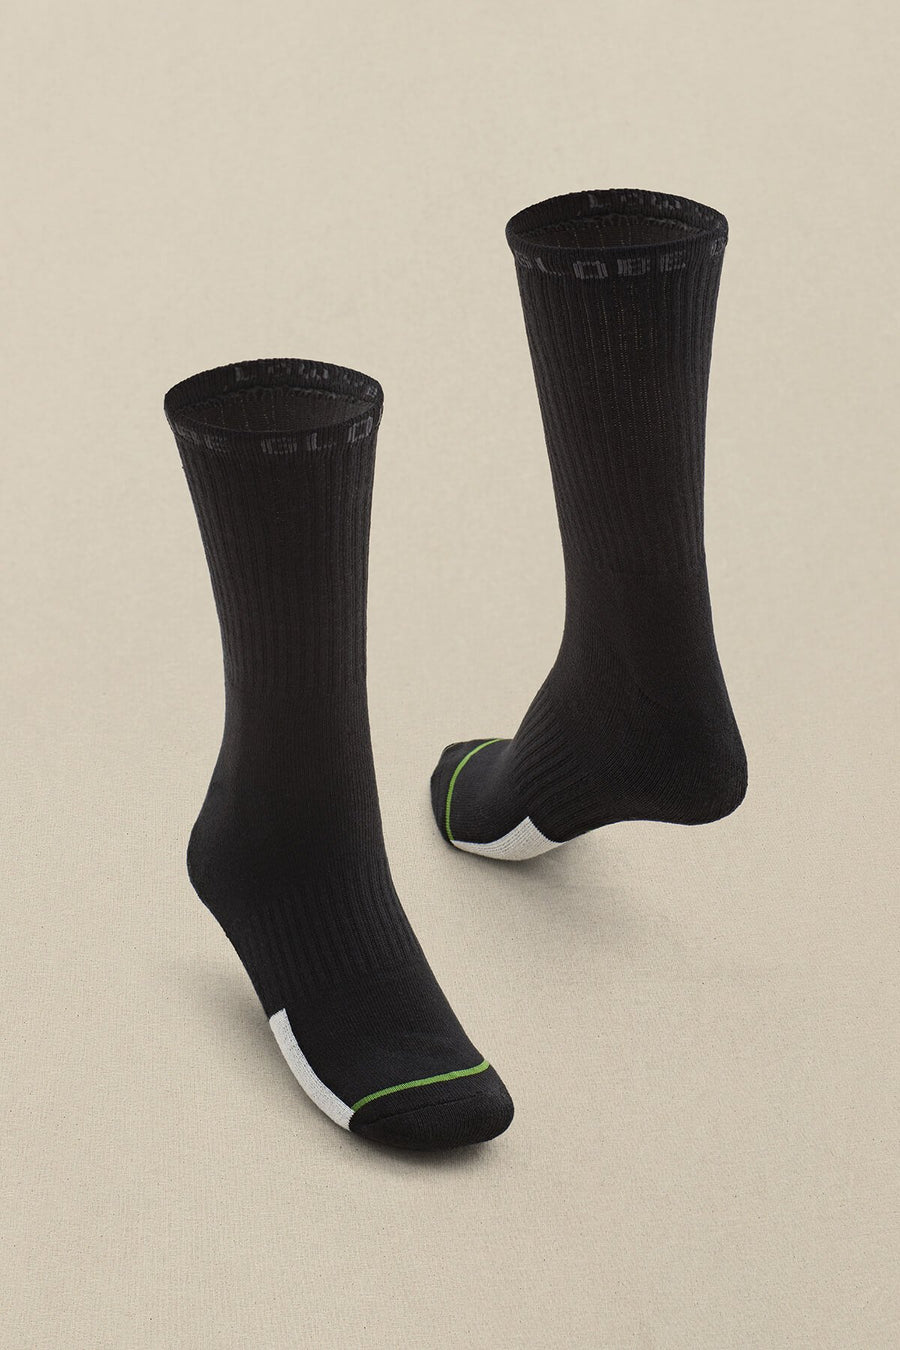 Globe Eco Crew Socks - 3 Packs Low Impact - [ka(:)rısma] showroom & concept store